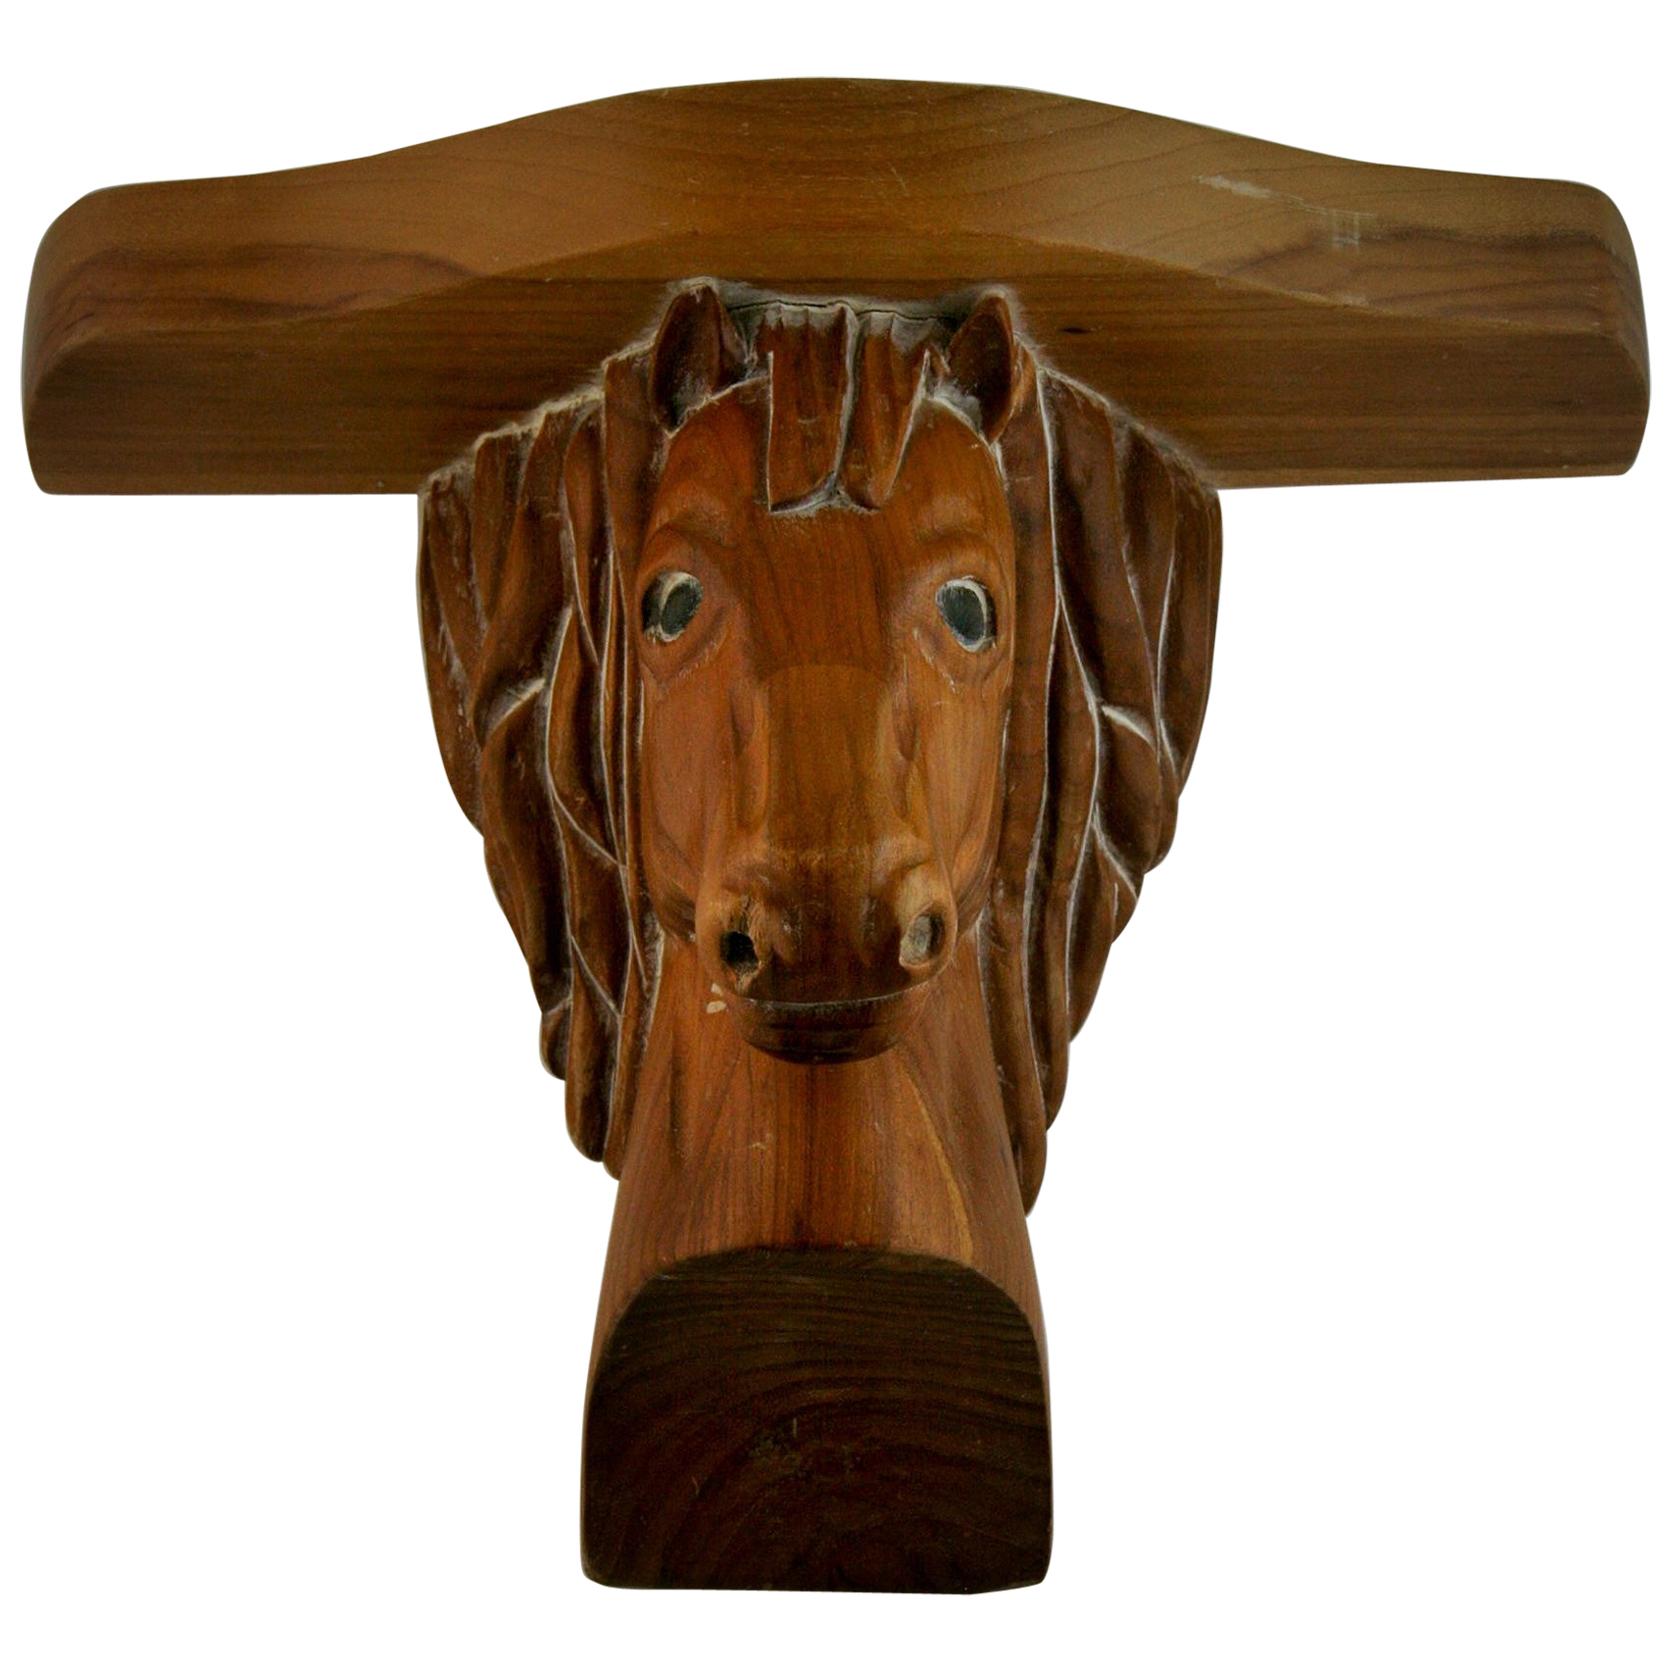 8-248 hand carved horse wood shelf or bracket shelf size 15 x 6.25 inches.